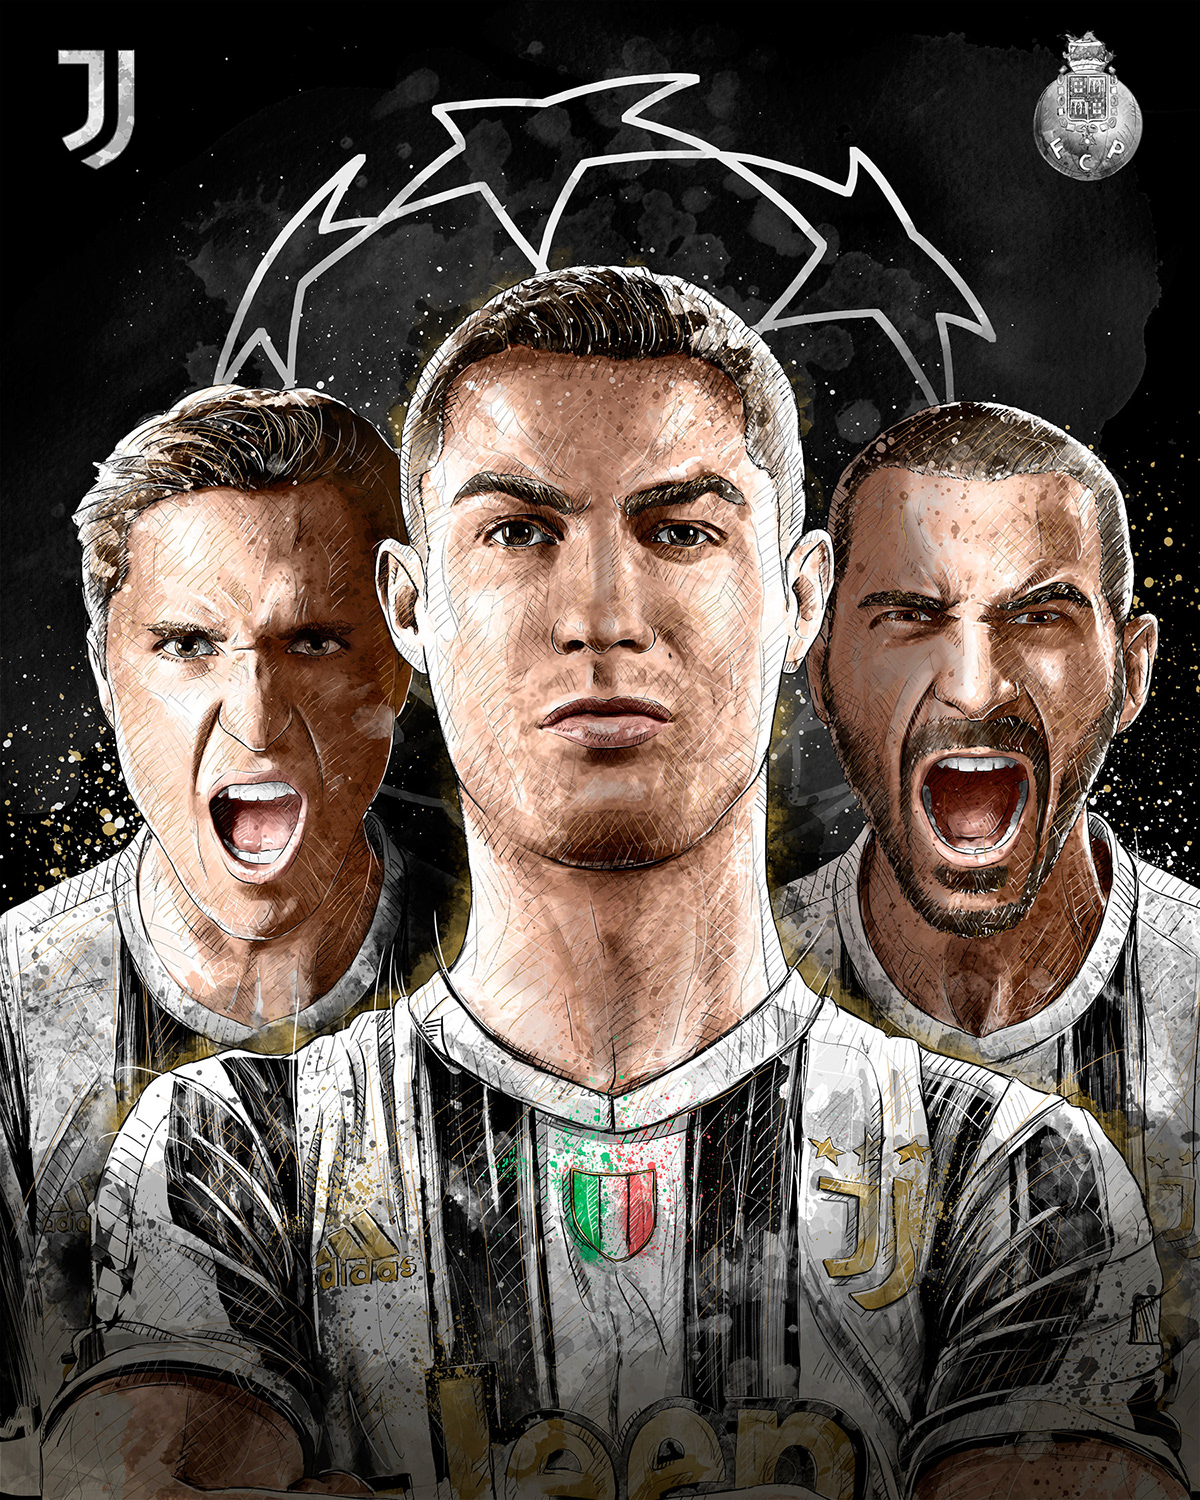 Dynamic sport/football illustration for Juventus vs. FC Porto: Bonucci, Ronaldo, chiesa. 
